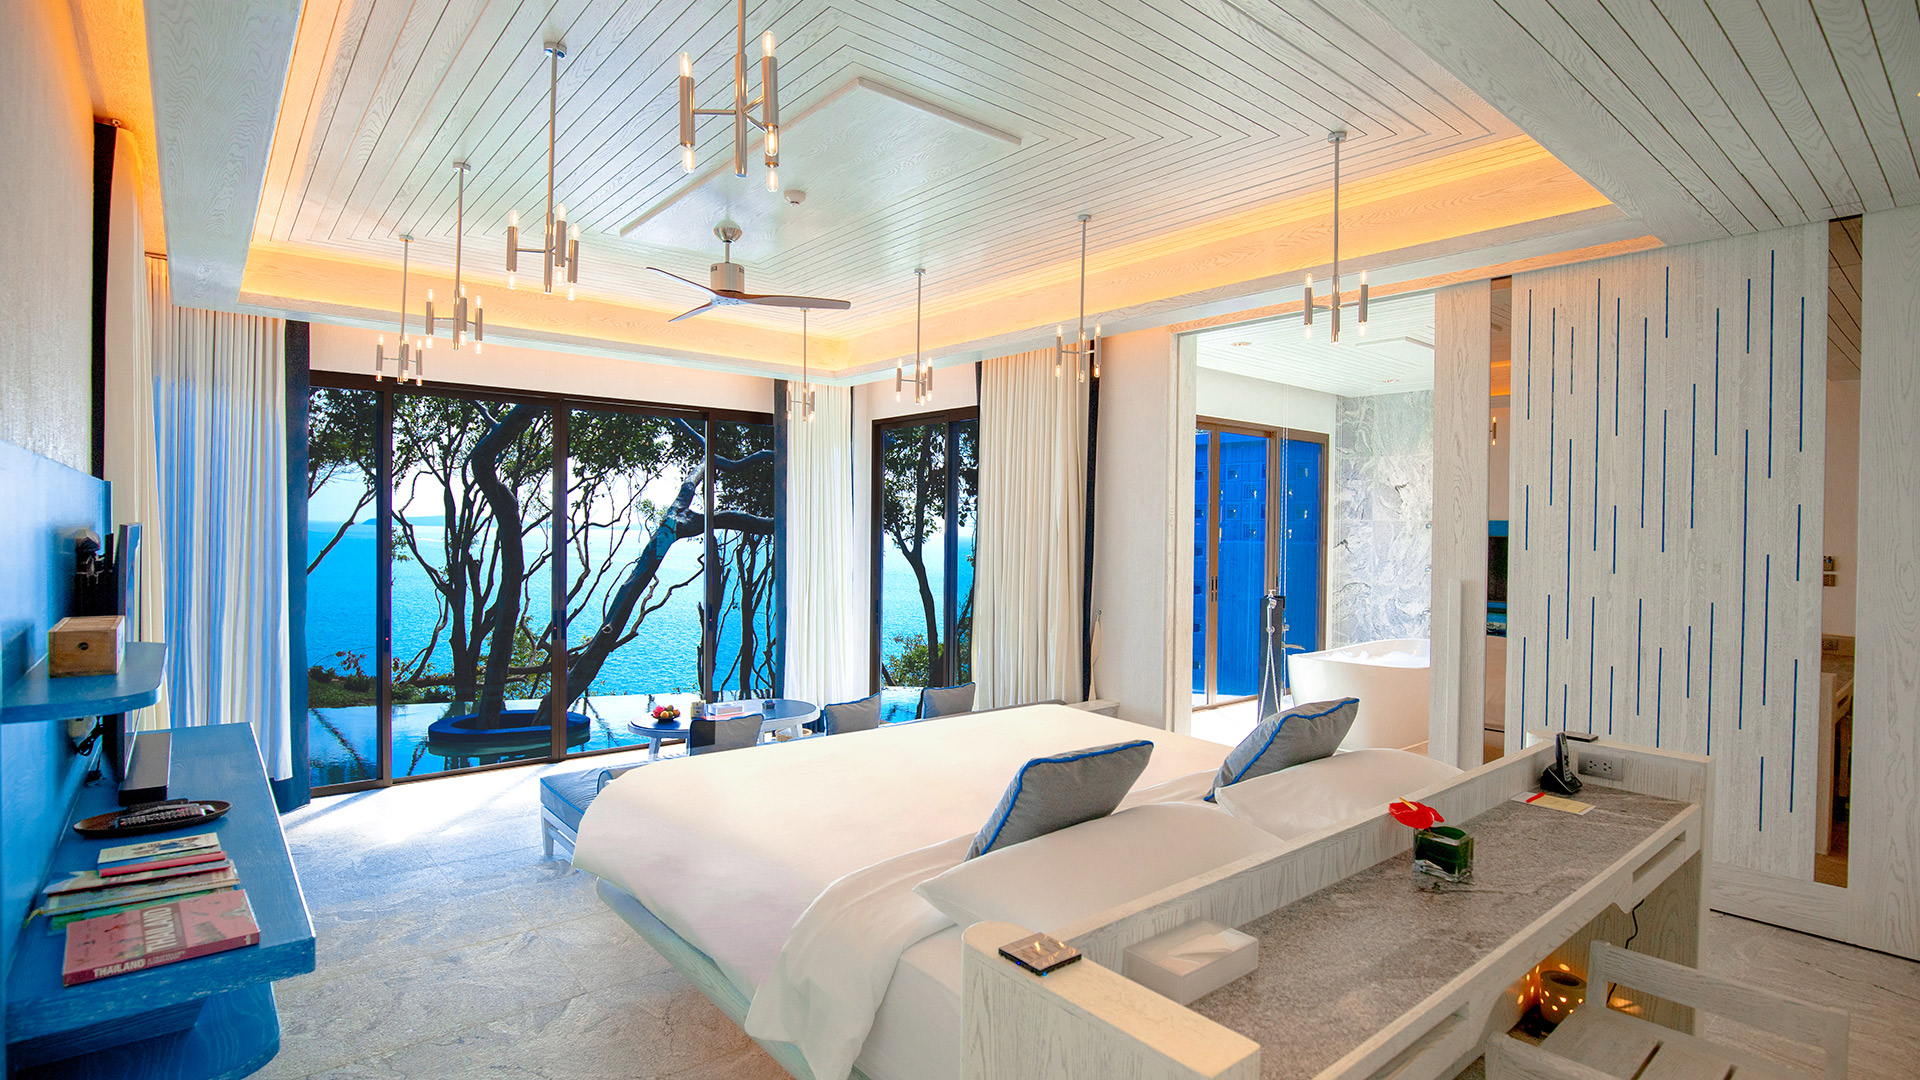 4br luxury residential hotel private luxury pool villa 6 star hotel bedroom